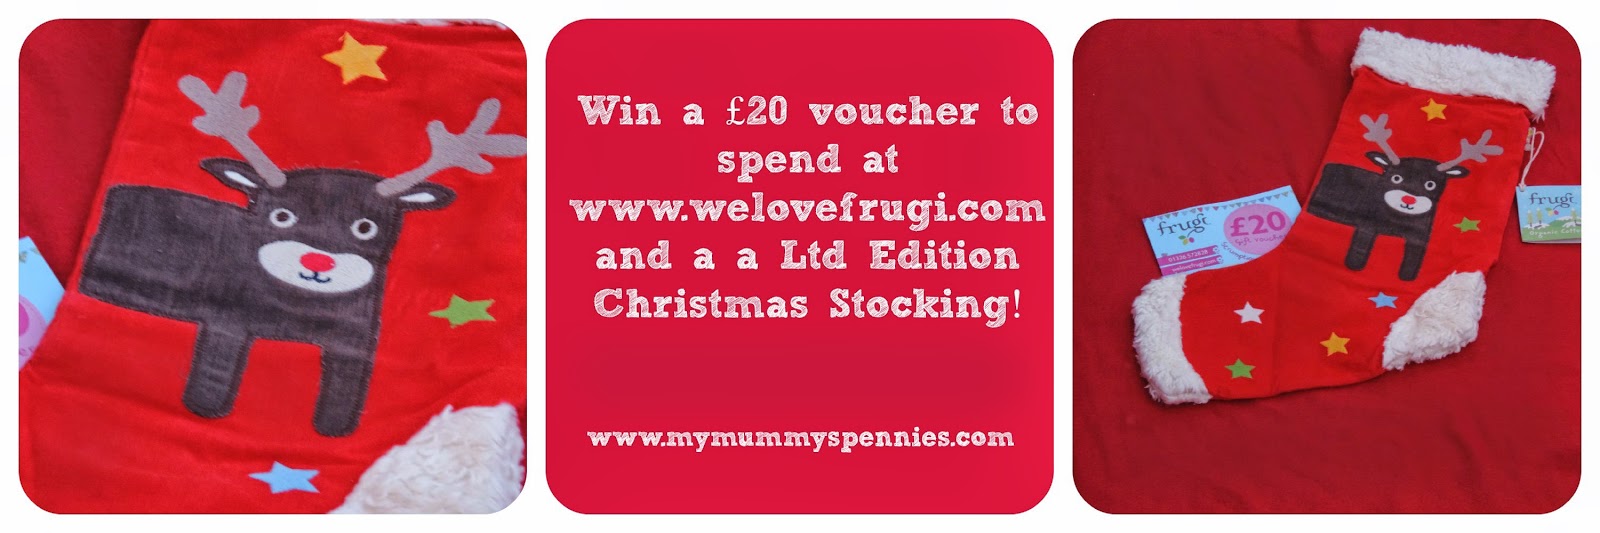 Win a £20 frugi voucher with www.mymummyspennies.com